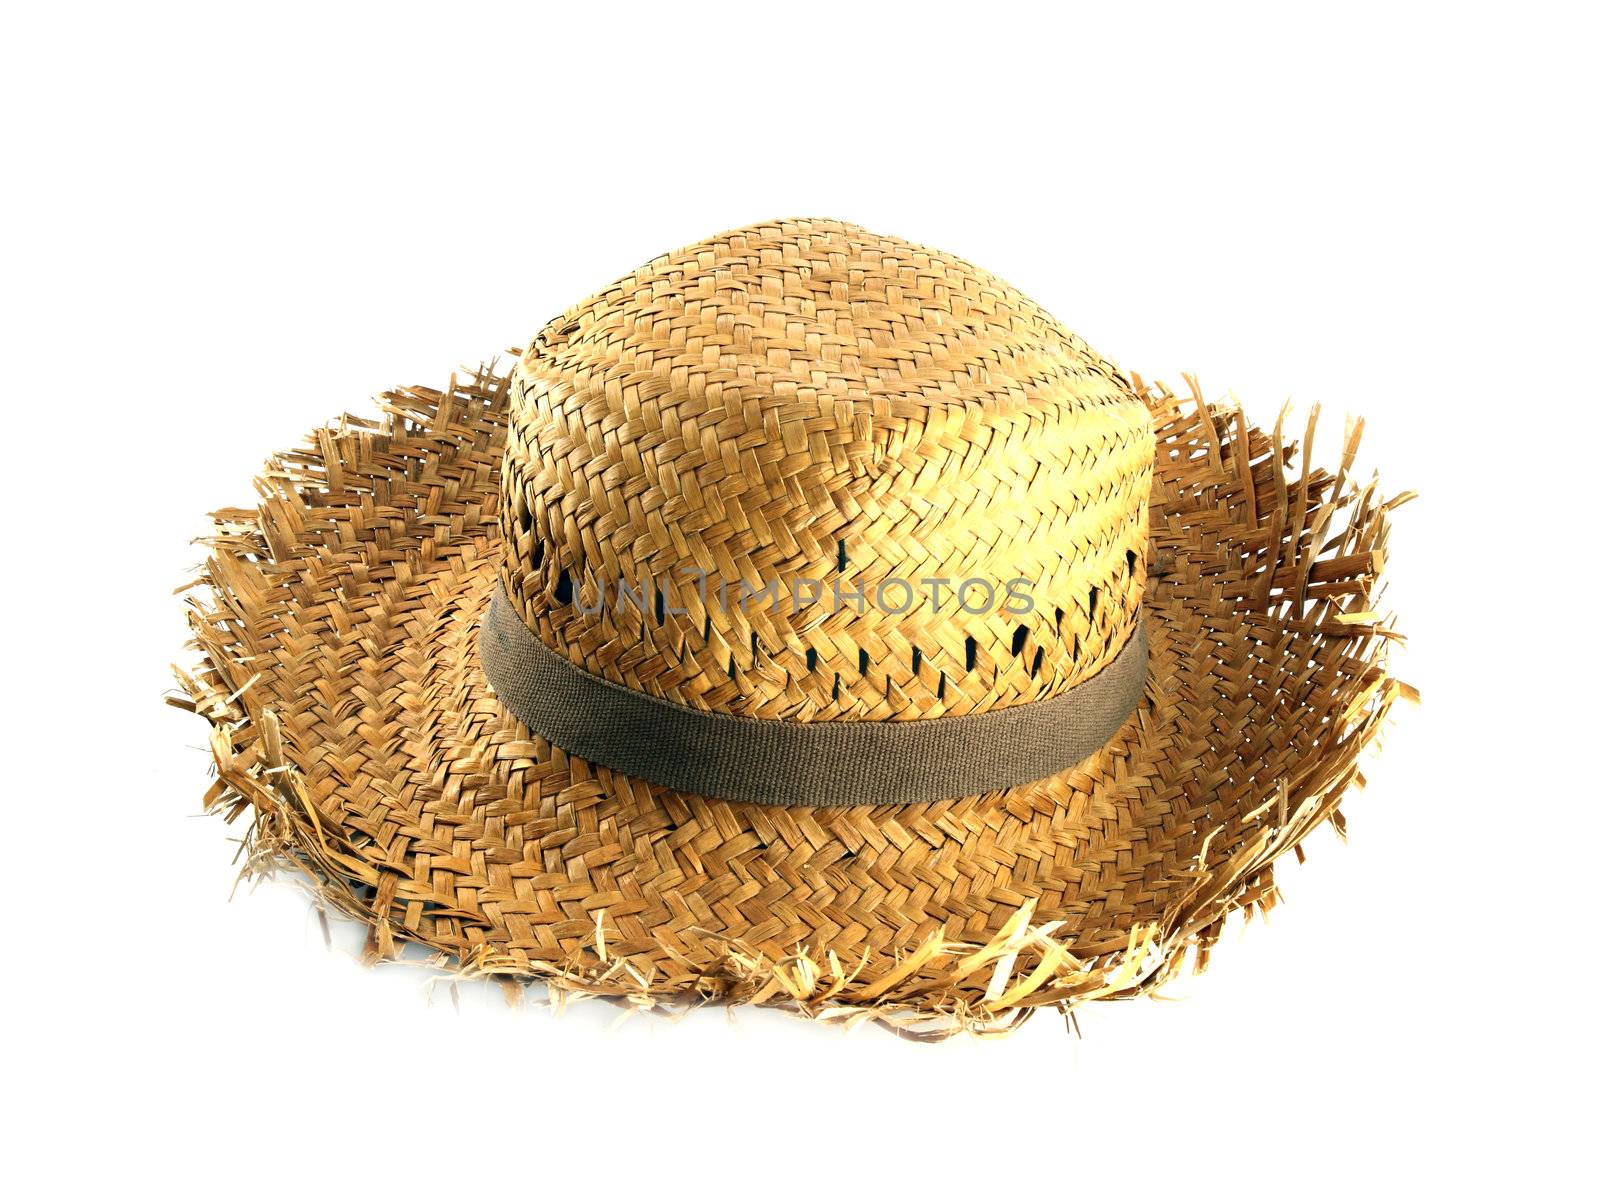 Straw hat on white background by geargodz